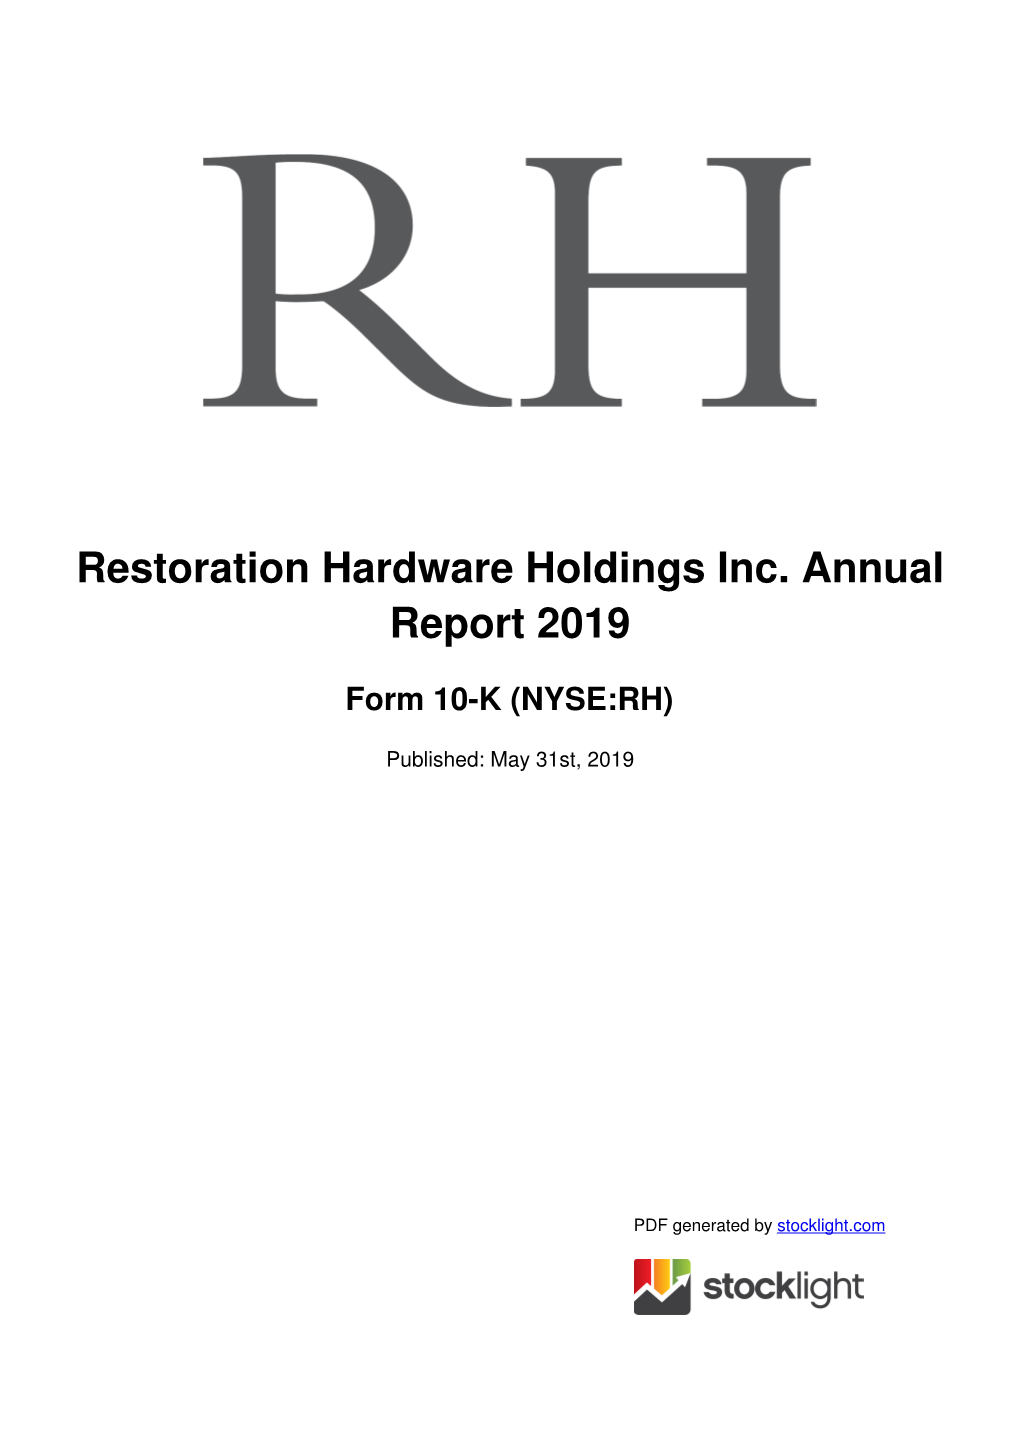 Restoration Hardware Holdings Inc. Annual Report 2019